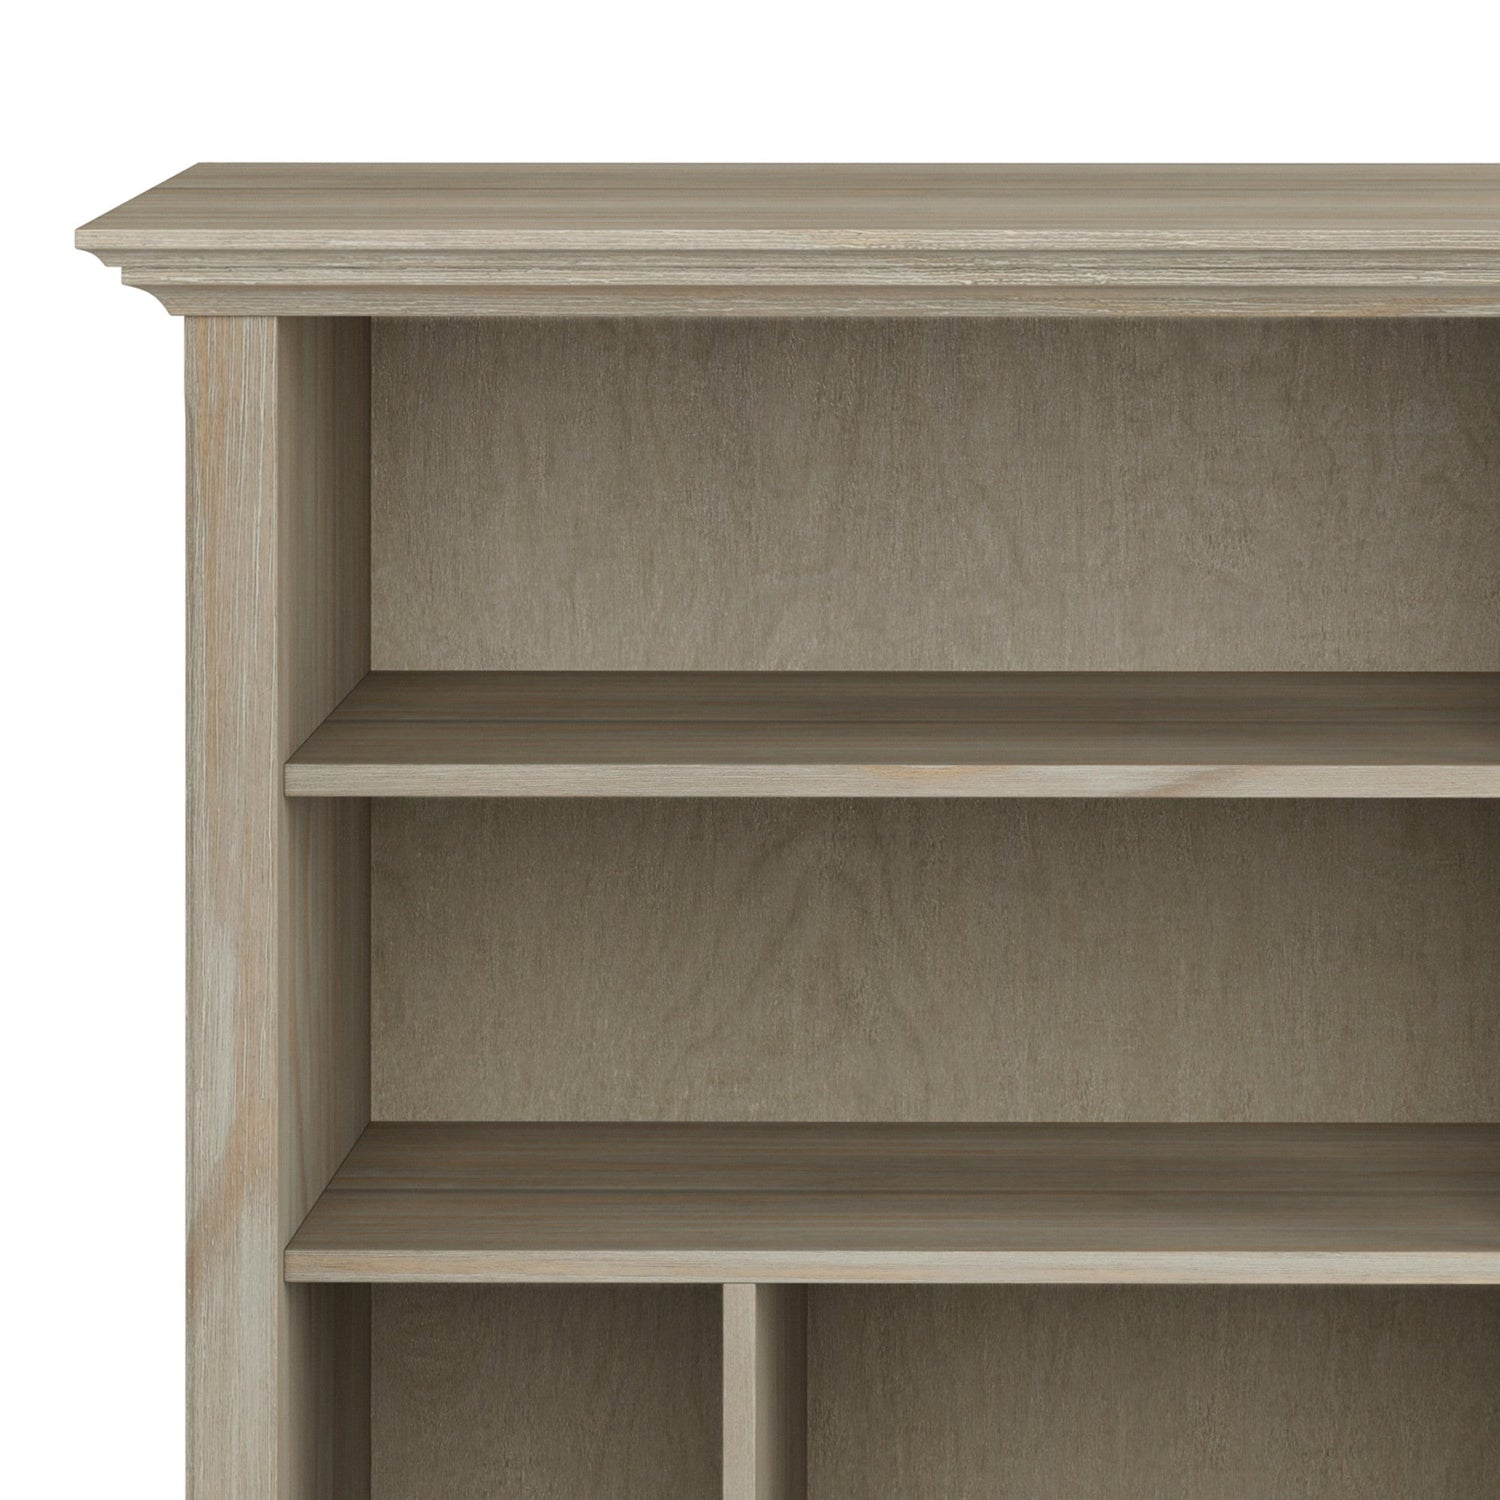 Distressed Grey | Amherst Multi-Cube Bookcase & Storage Unit